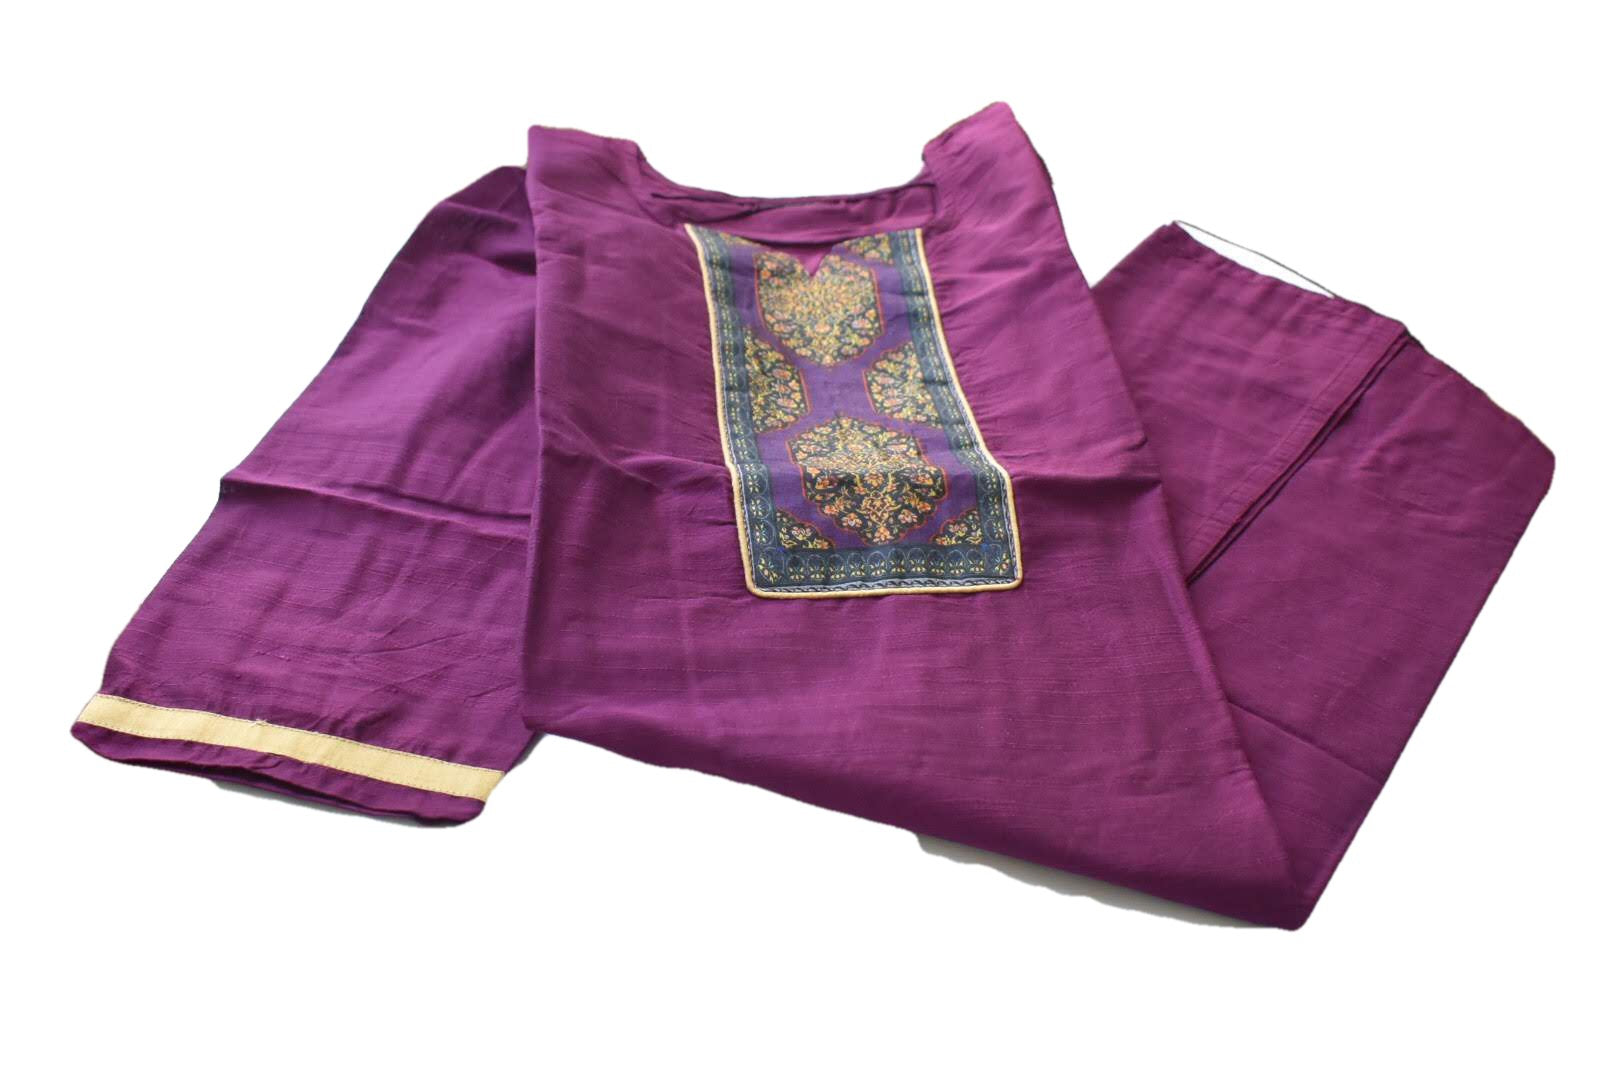 Purple Color - Pure Raw Silk Kurti Size Small/Medium - 30/32, Junior size. Big Girls size - 18 plus